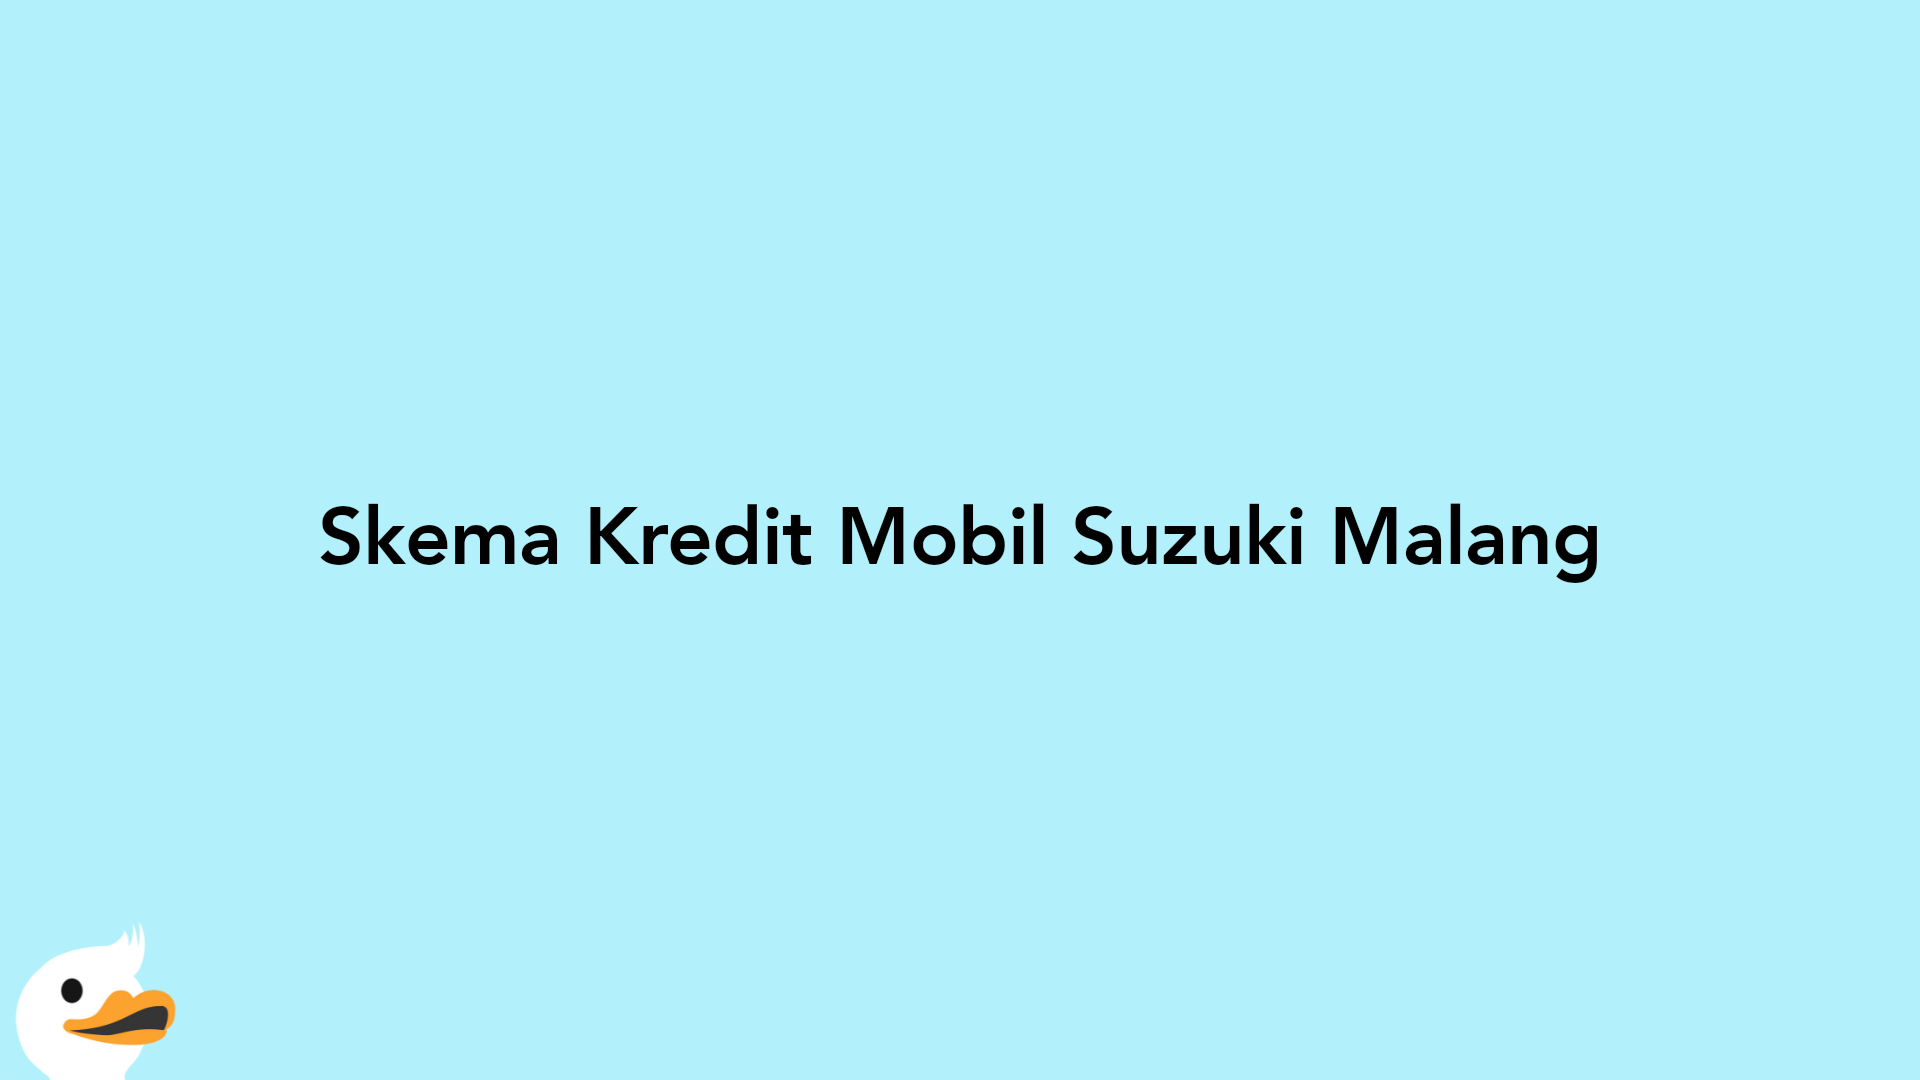 Skema Kredit Mobil Suzuki Malang